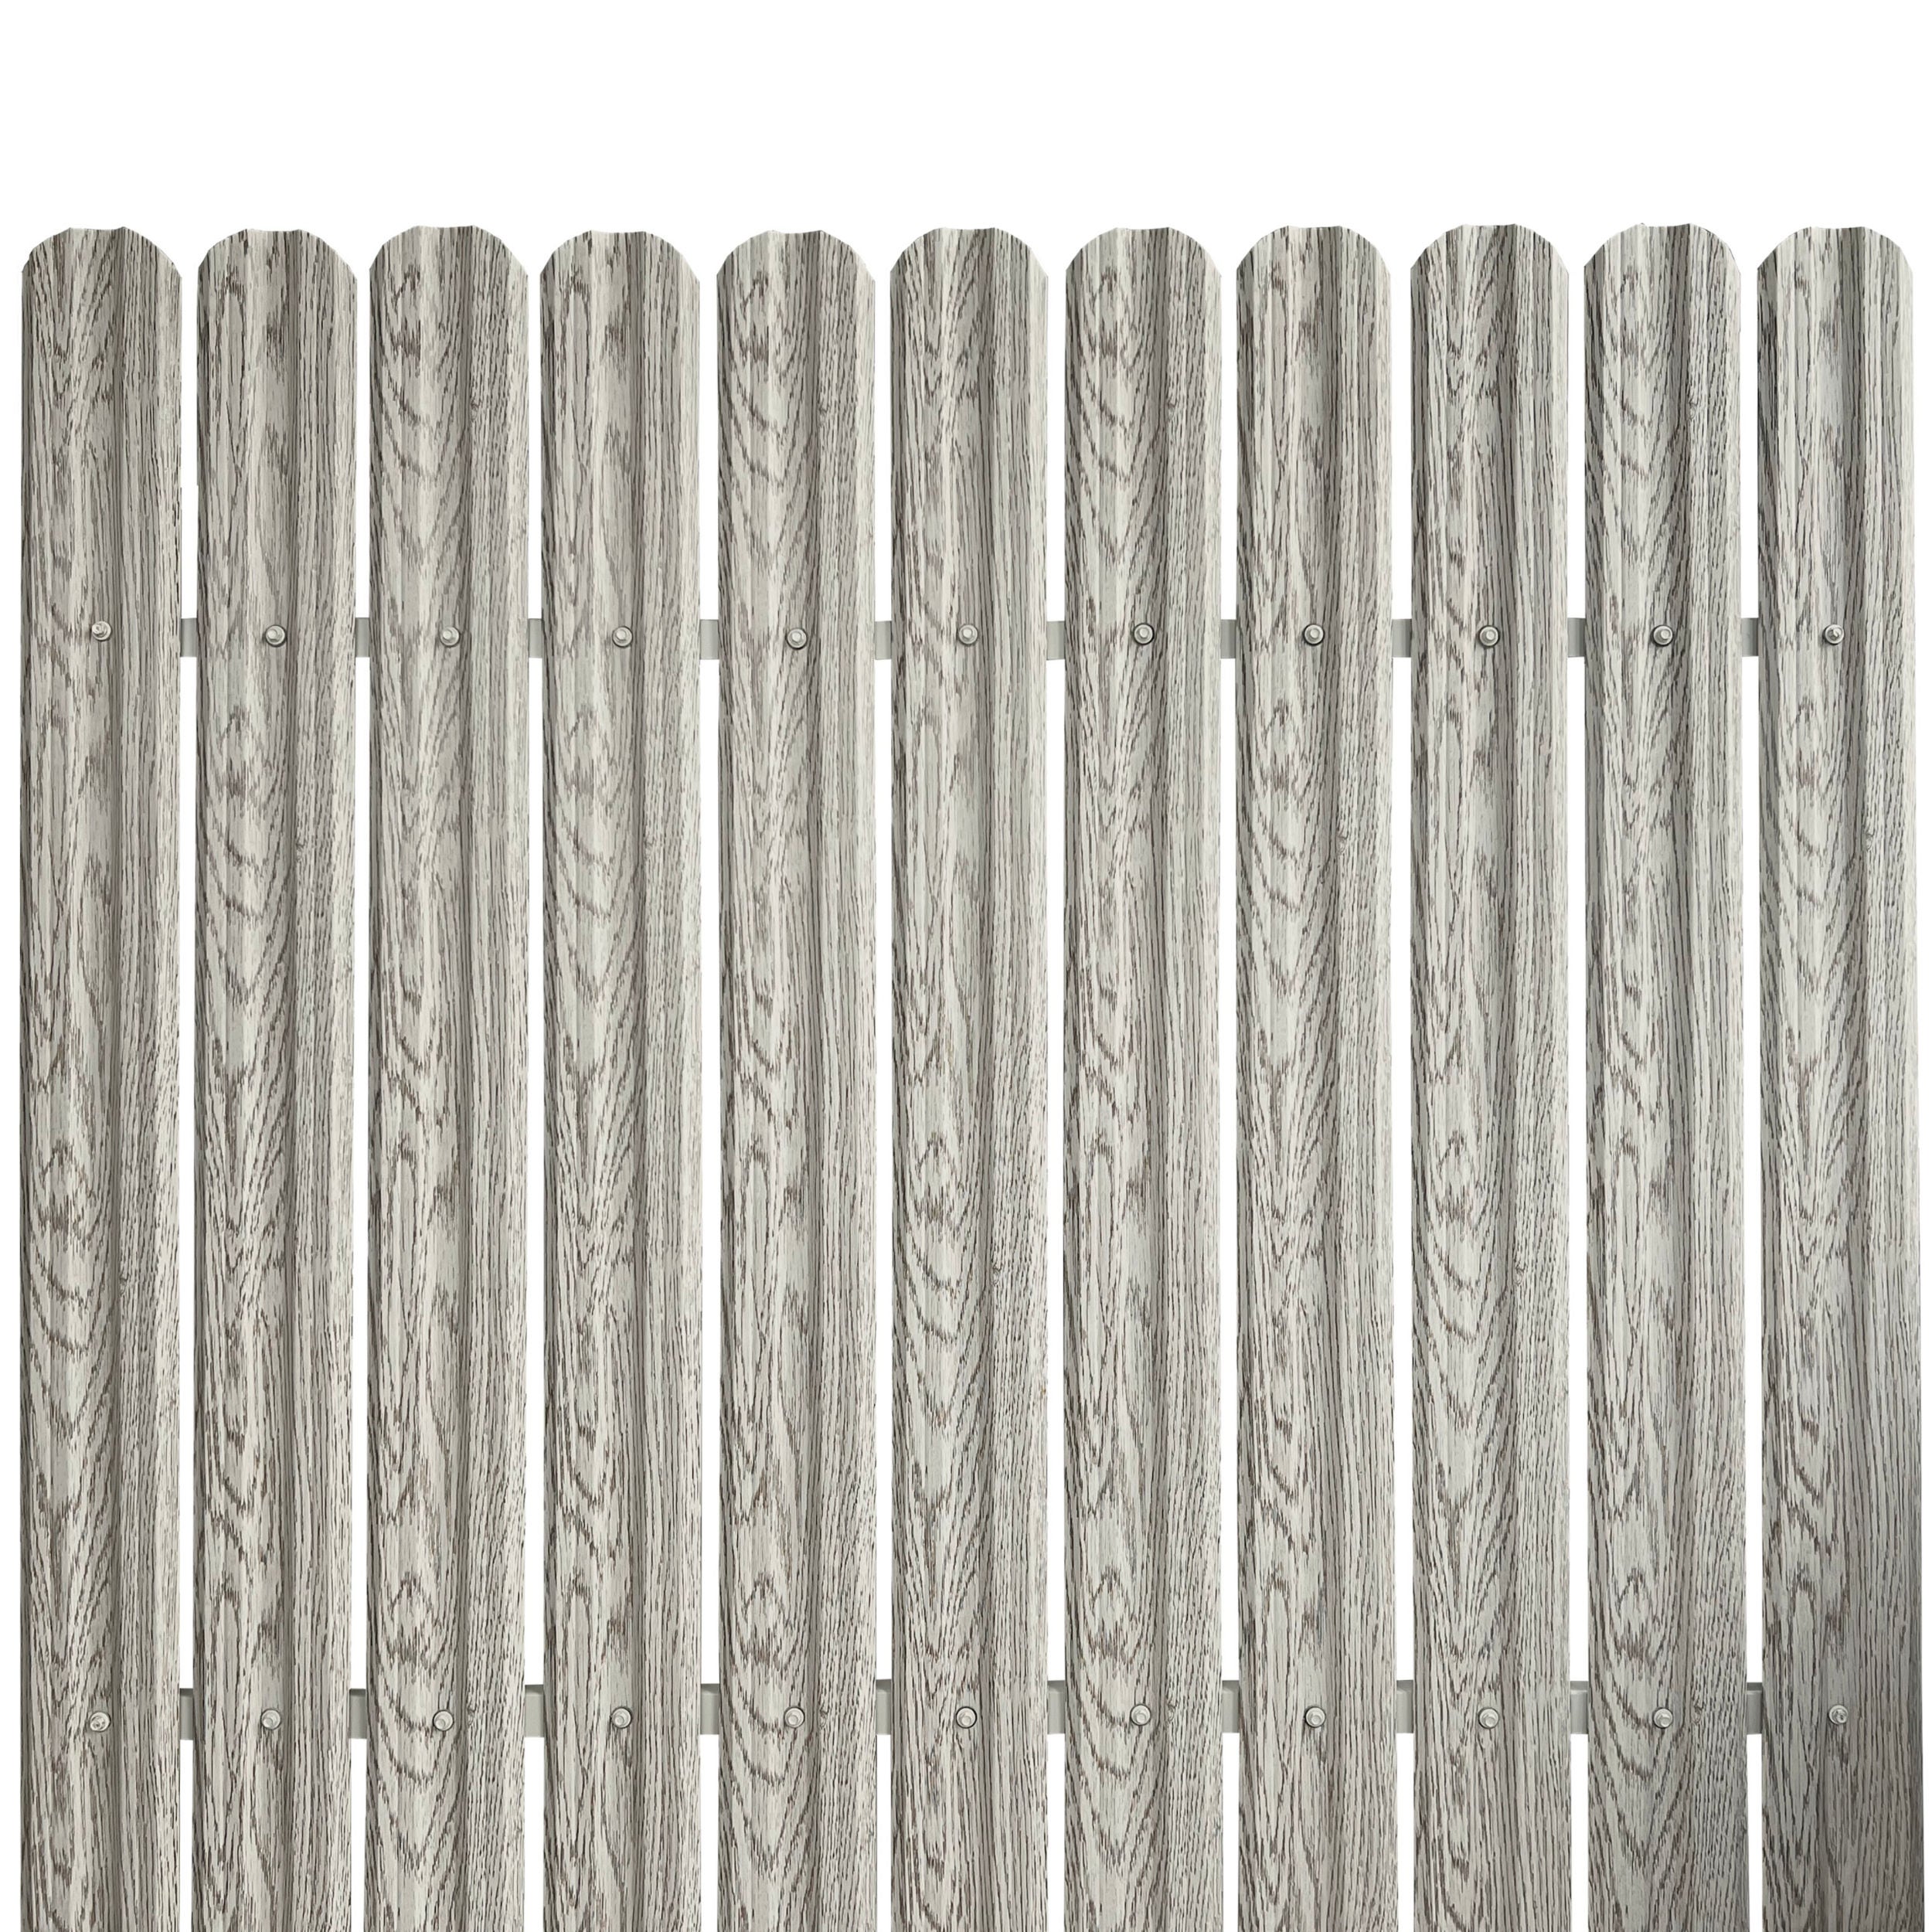 Sipca metalica cutata pentru gard, stejar alb, 1300 x 115 x 0.4 mm, set 25 bucati + 50 bucati surub autoforant